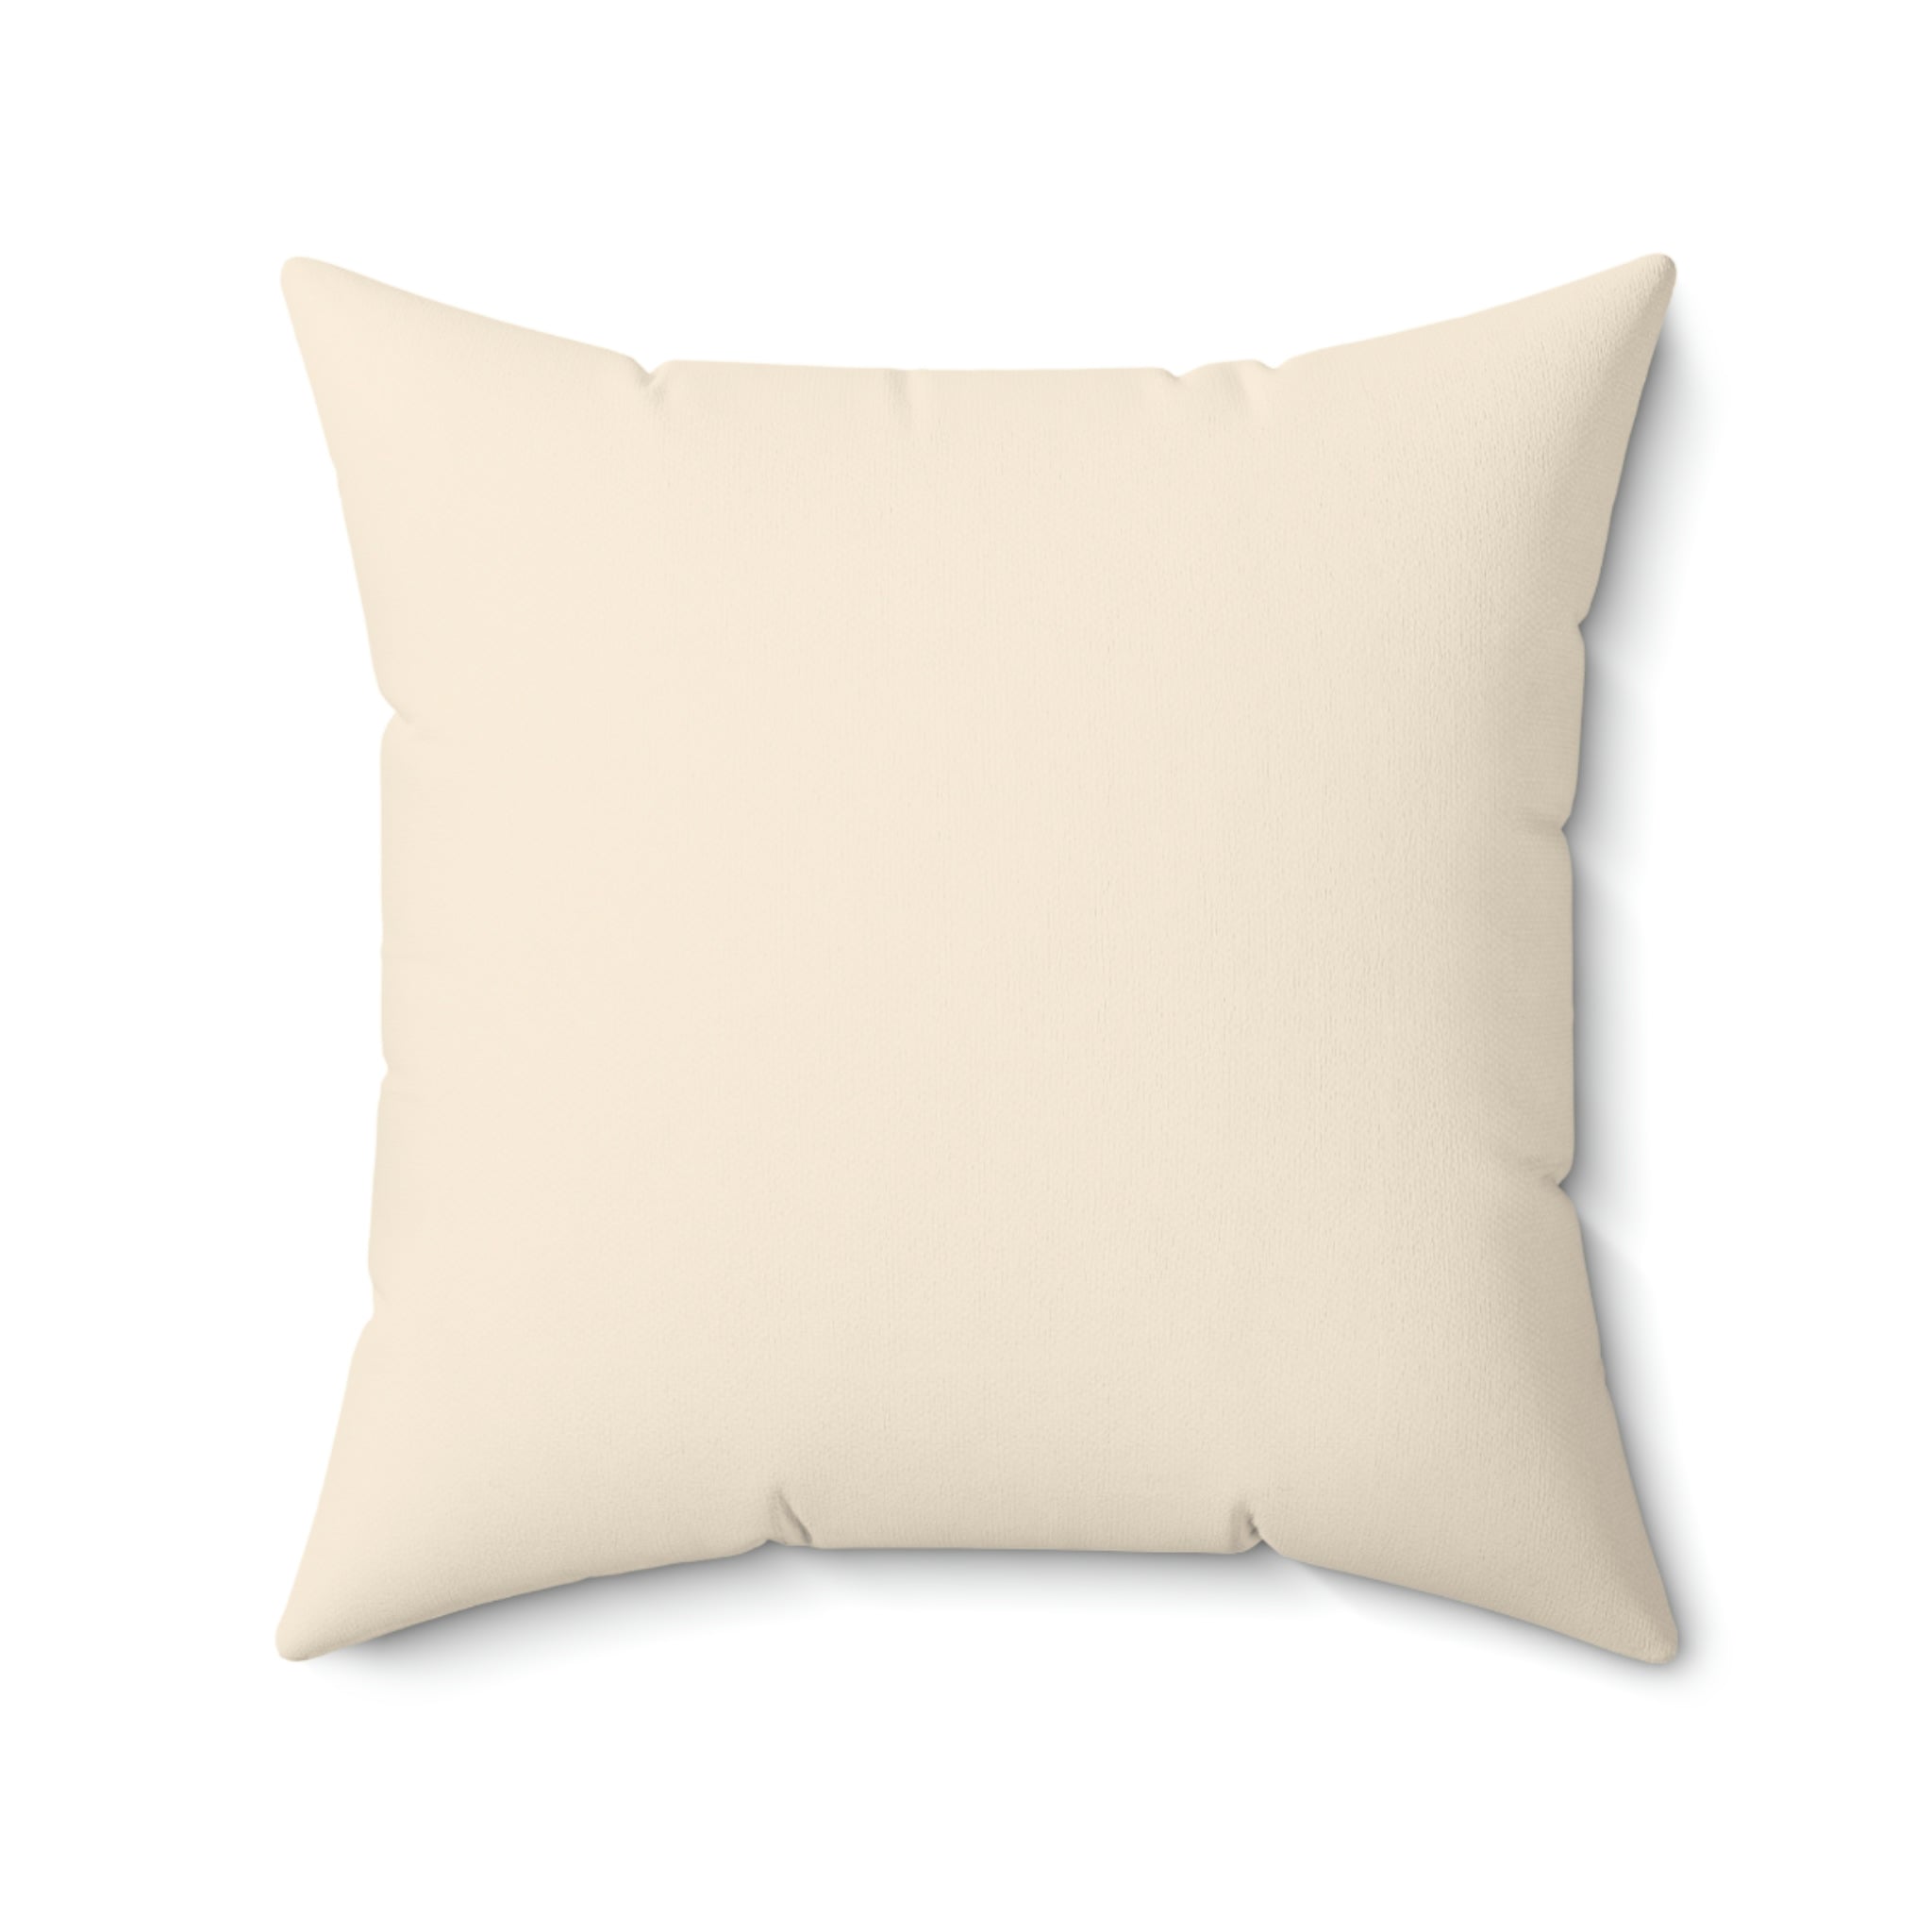 Love Spun Polyester Pillow Heart layer off white pattern